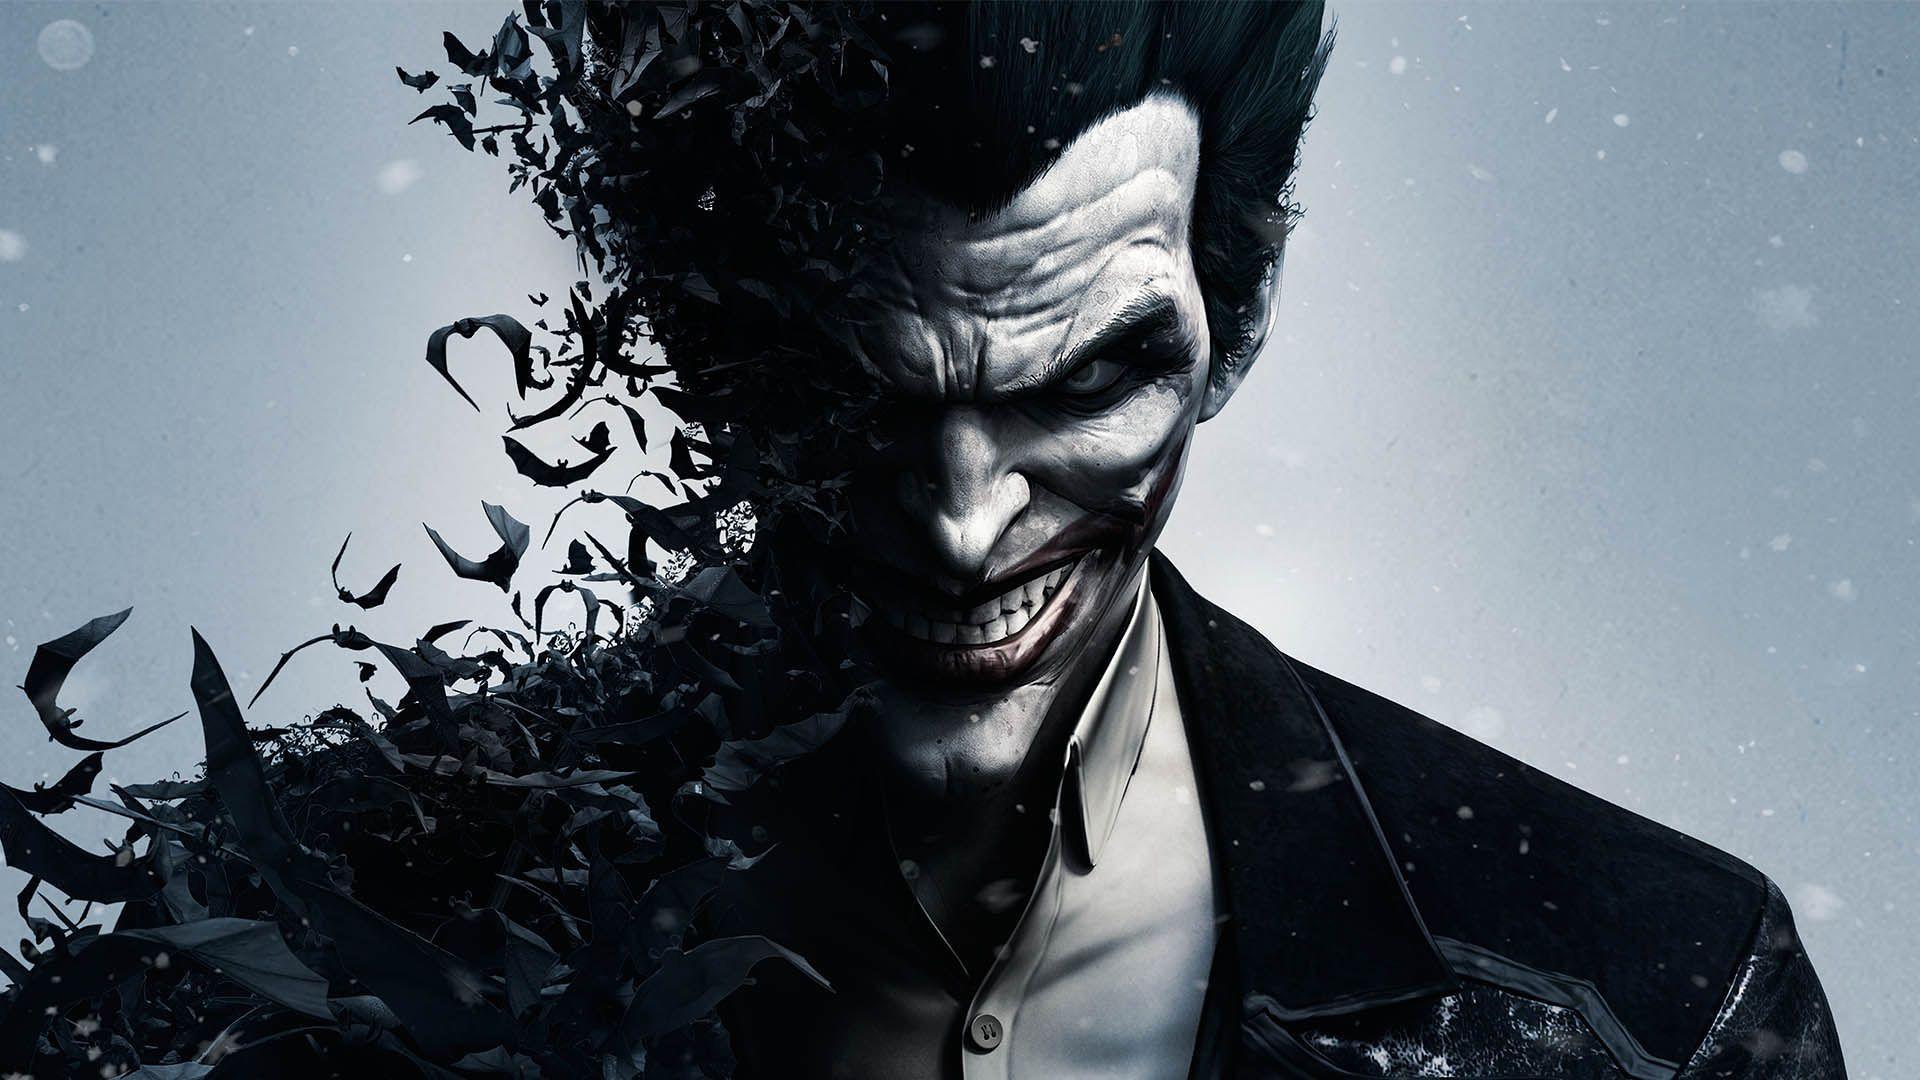 Joker Suicide Squad Wallpaper